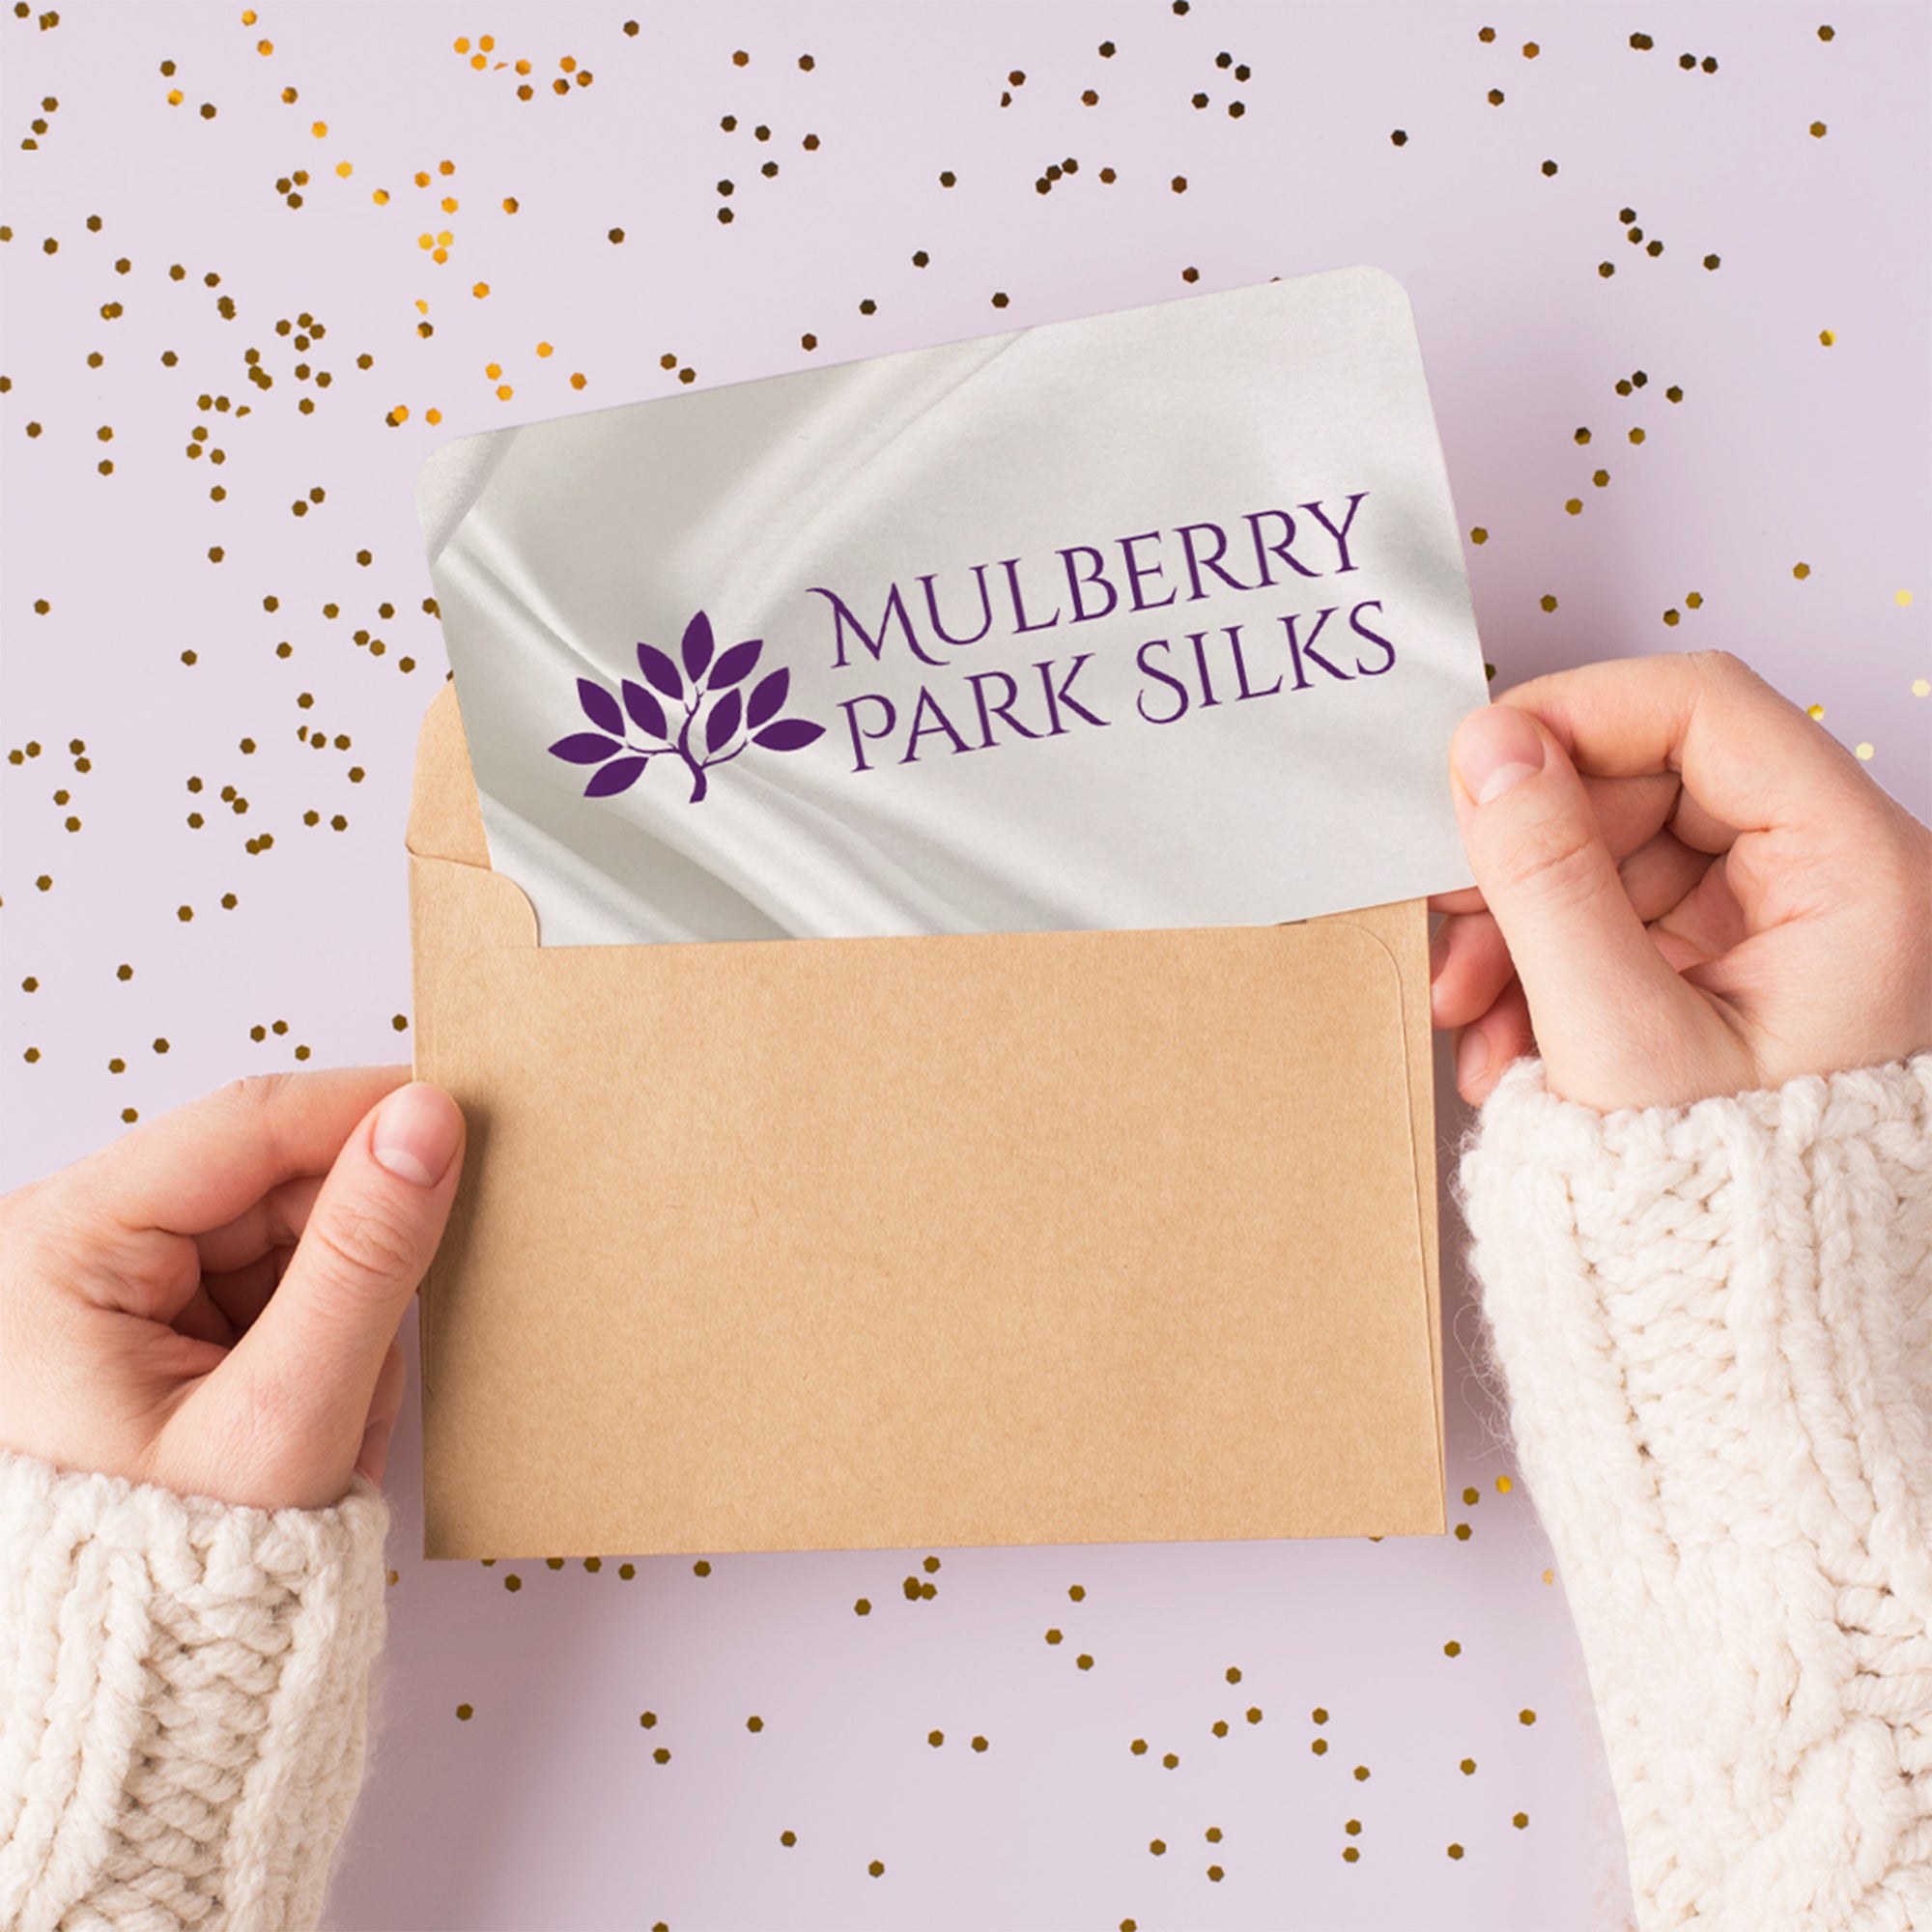 Mulberry Park Silks Gift Card